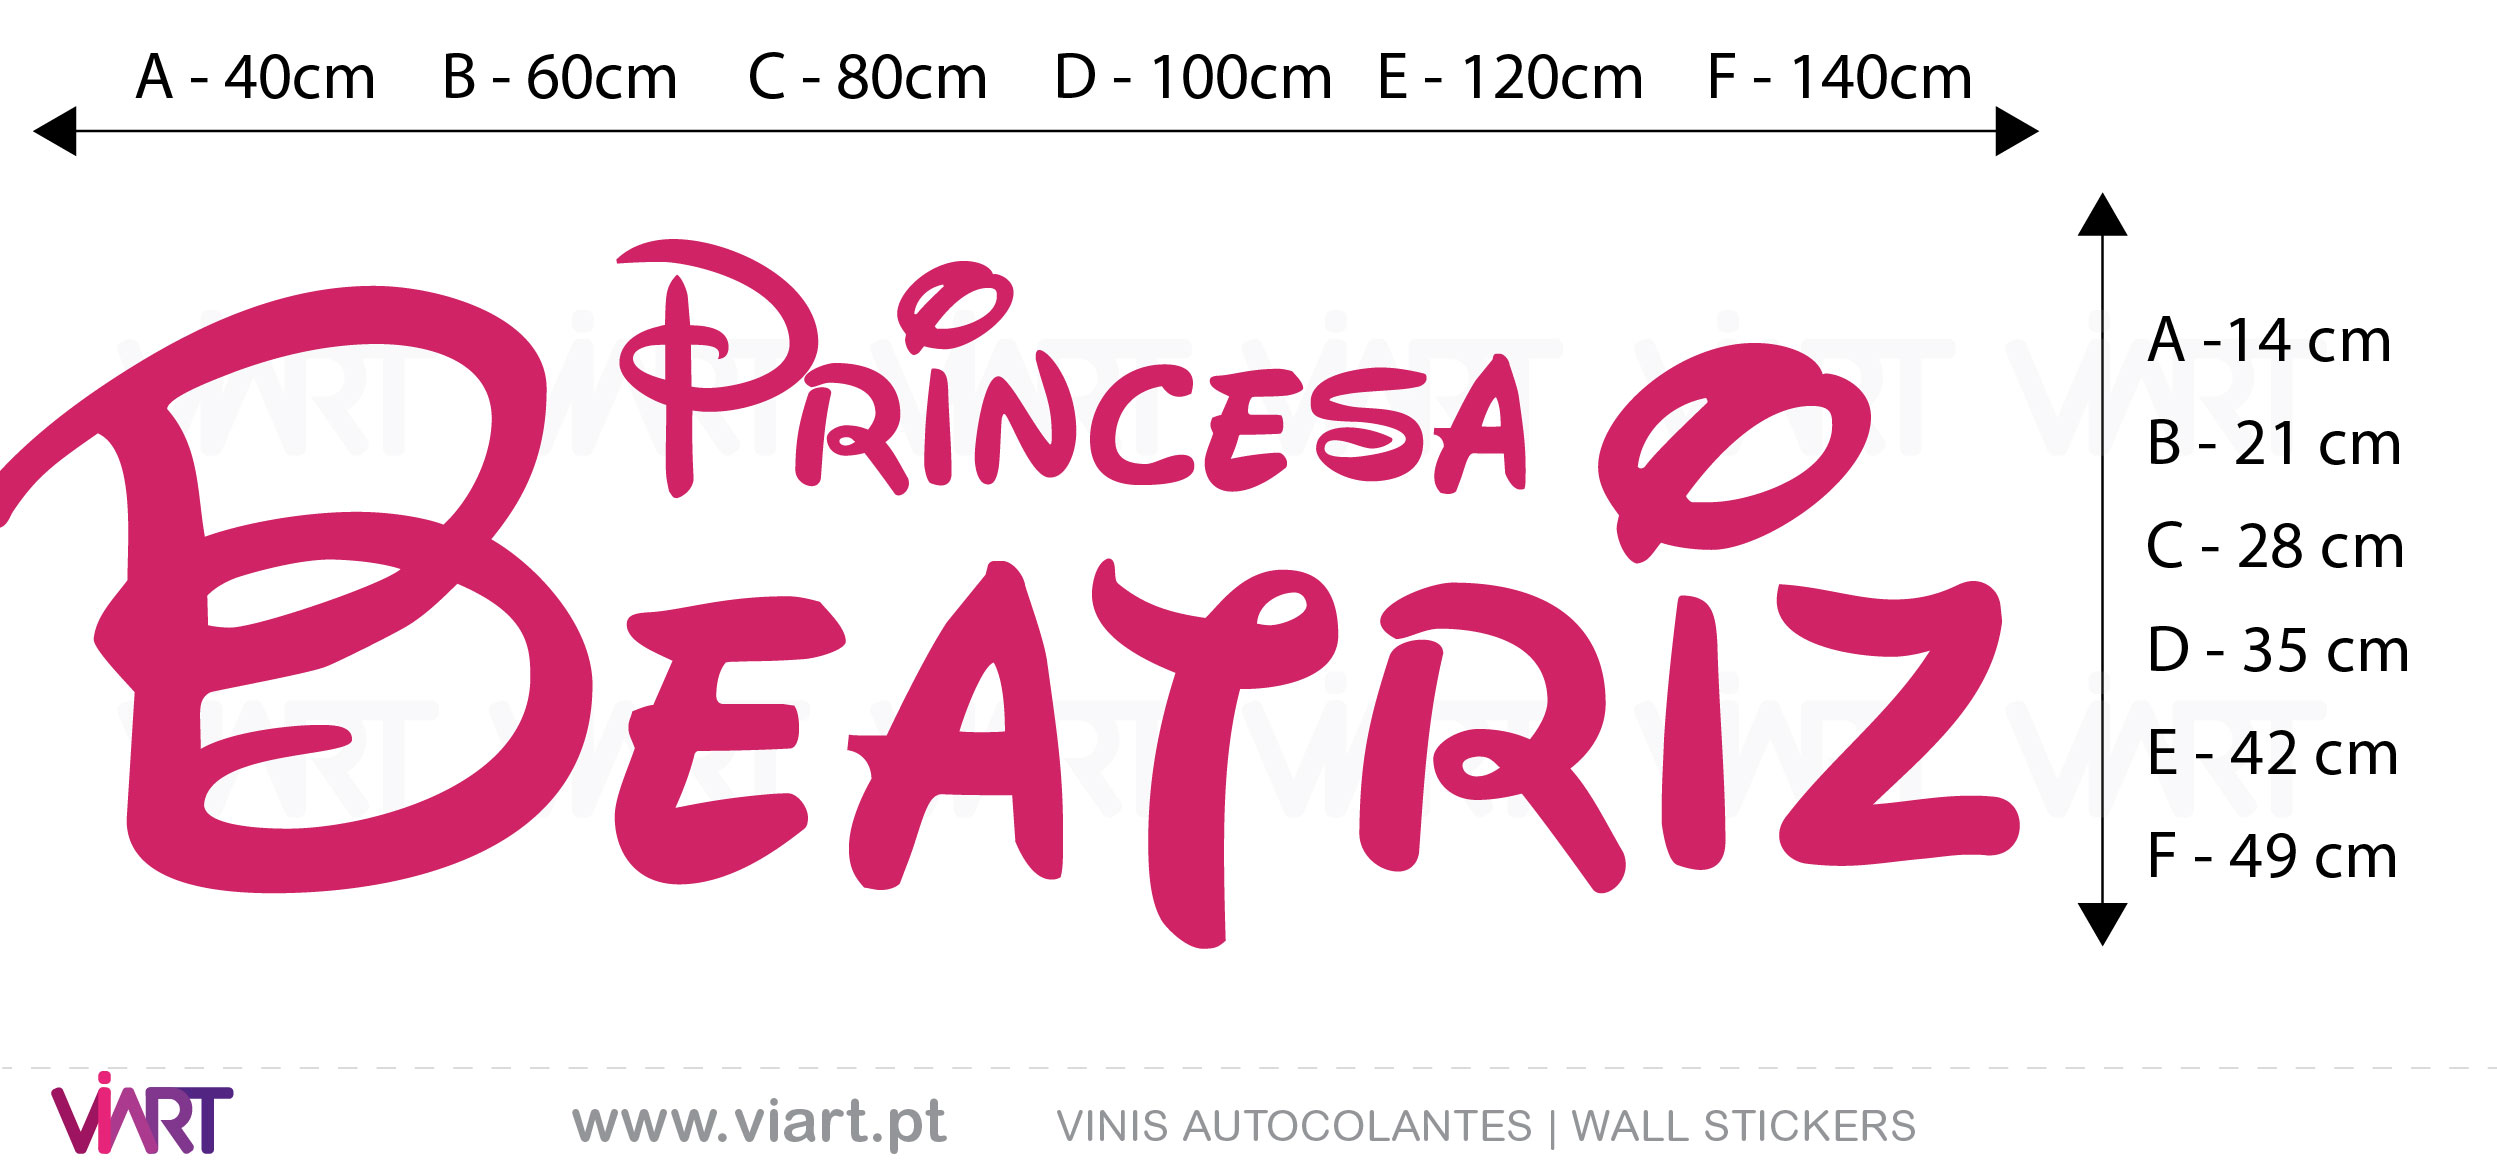 Viart Wall Stickers - Customizable Princess Name- measures